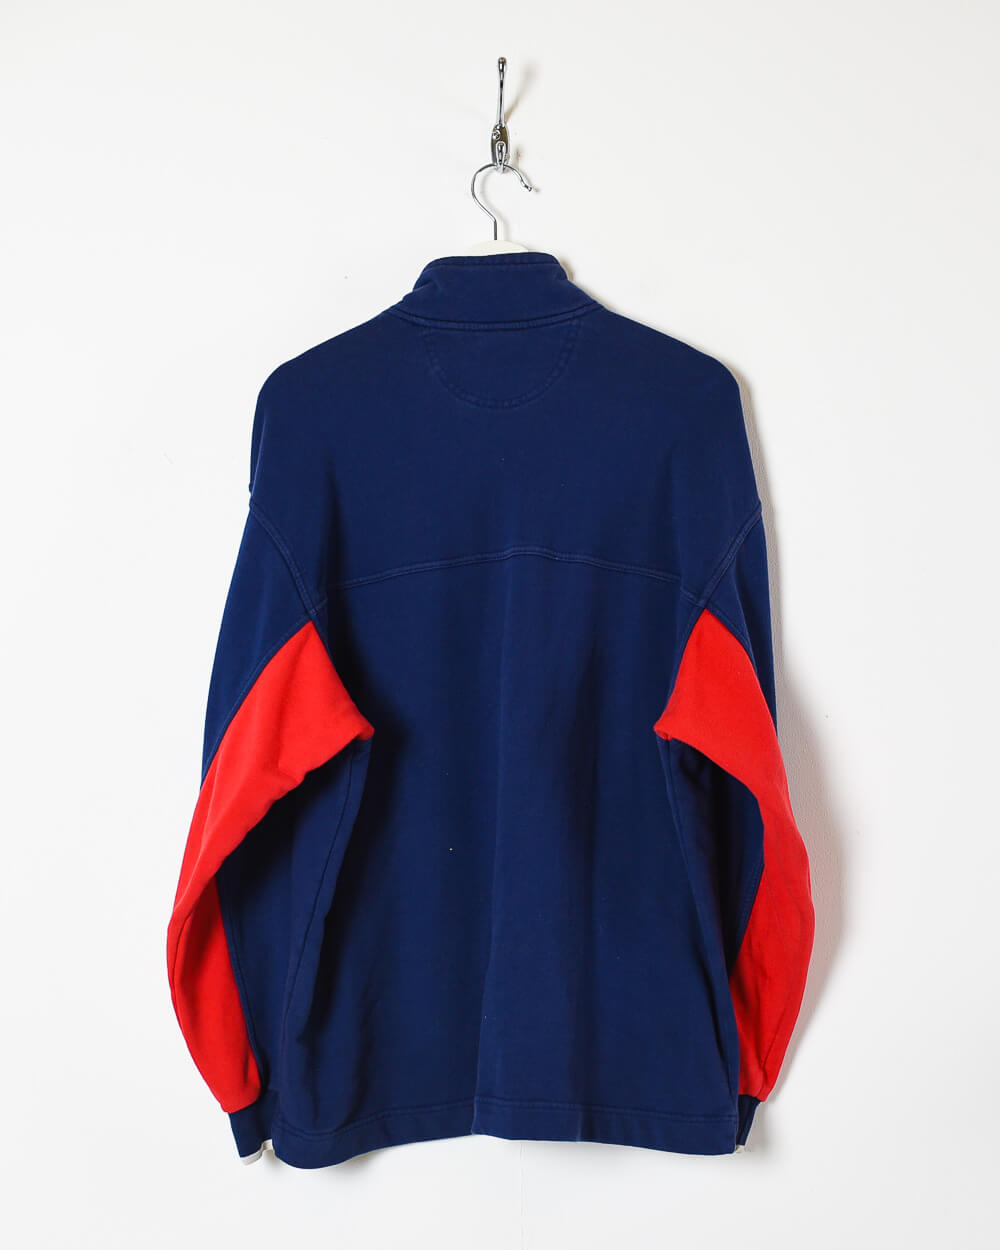 Navy Nike 1/4 Zip Sweatshirt - Medium